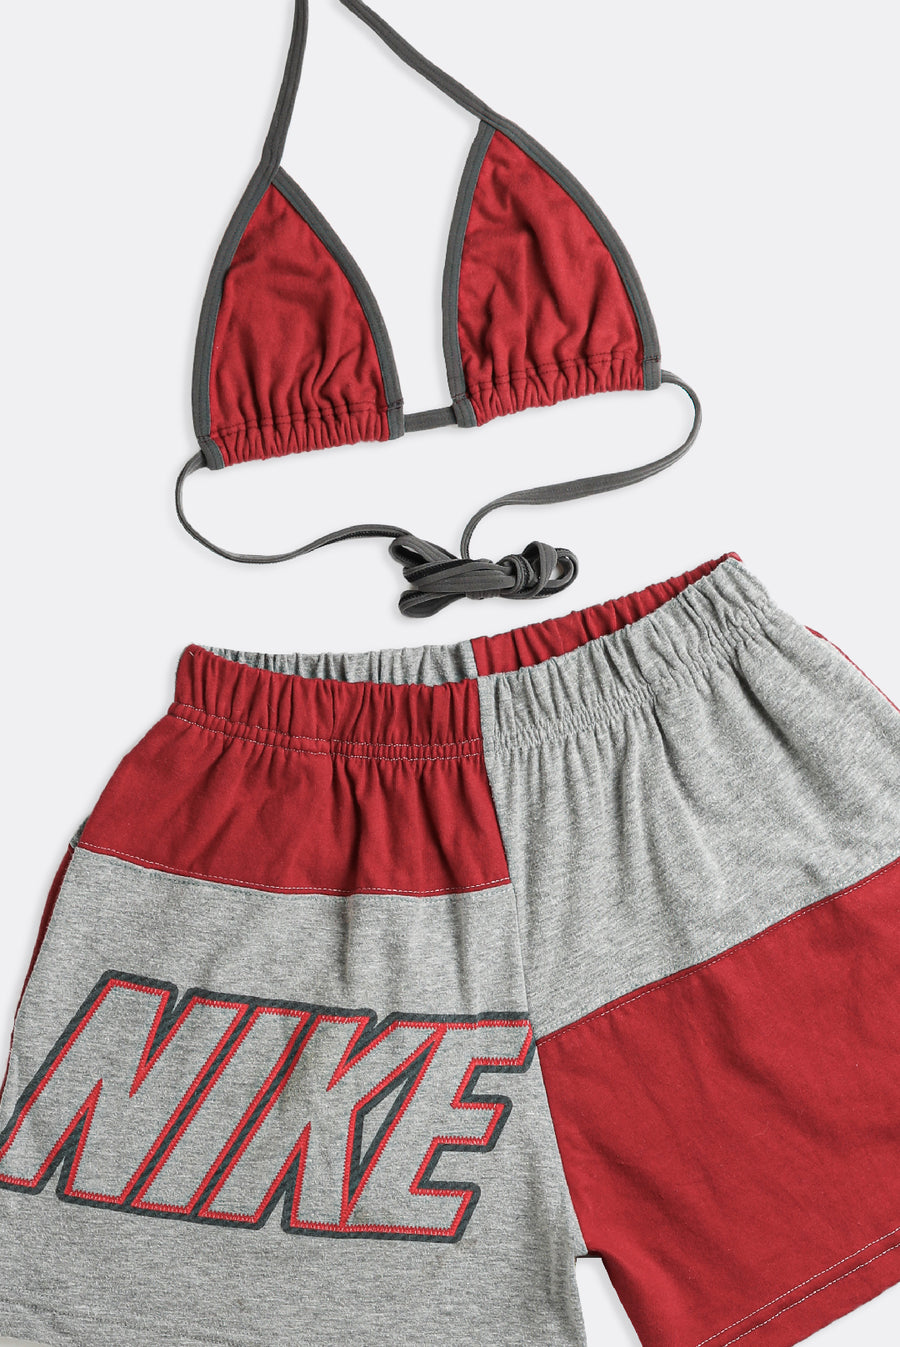 Rework Nike Patchwork Tee Shorts Set - XS